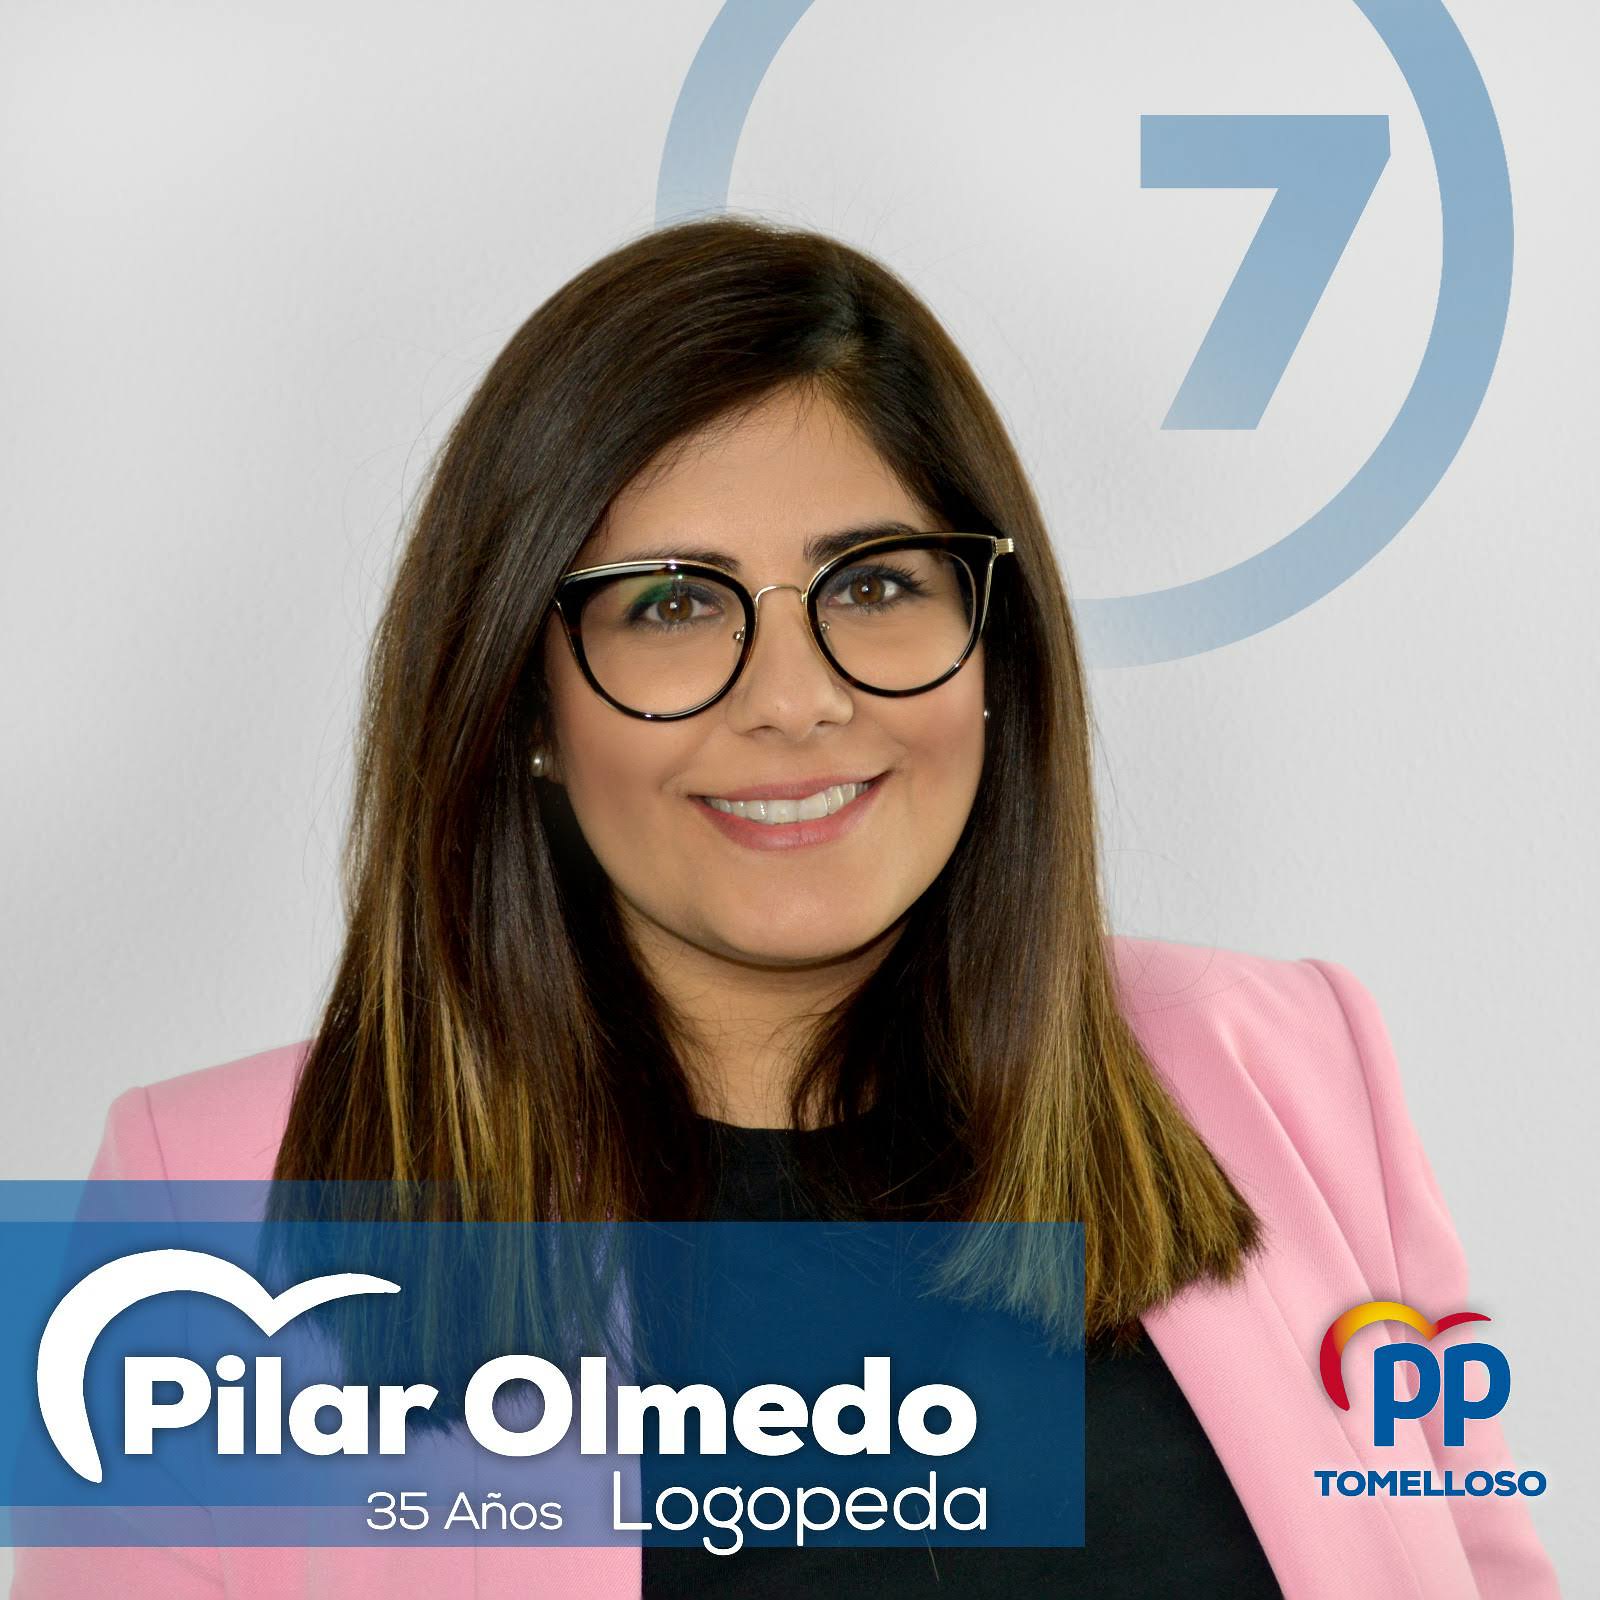 pilar-olmedo-pp-tomelloso